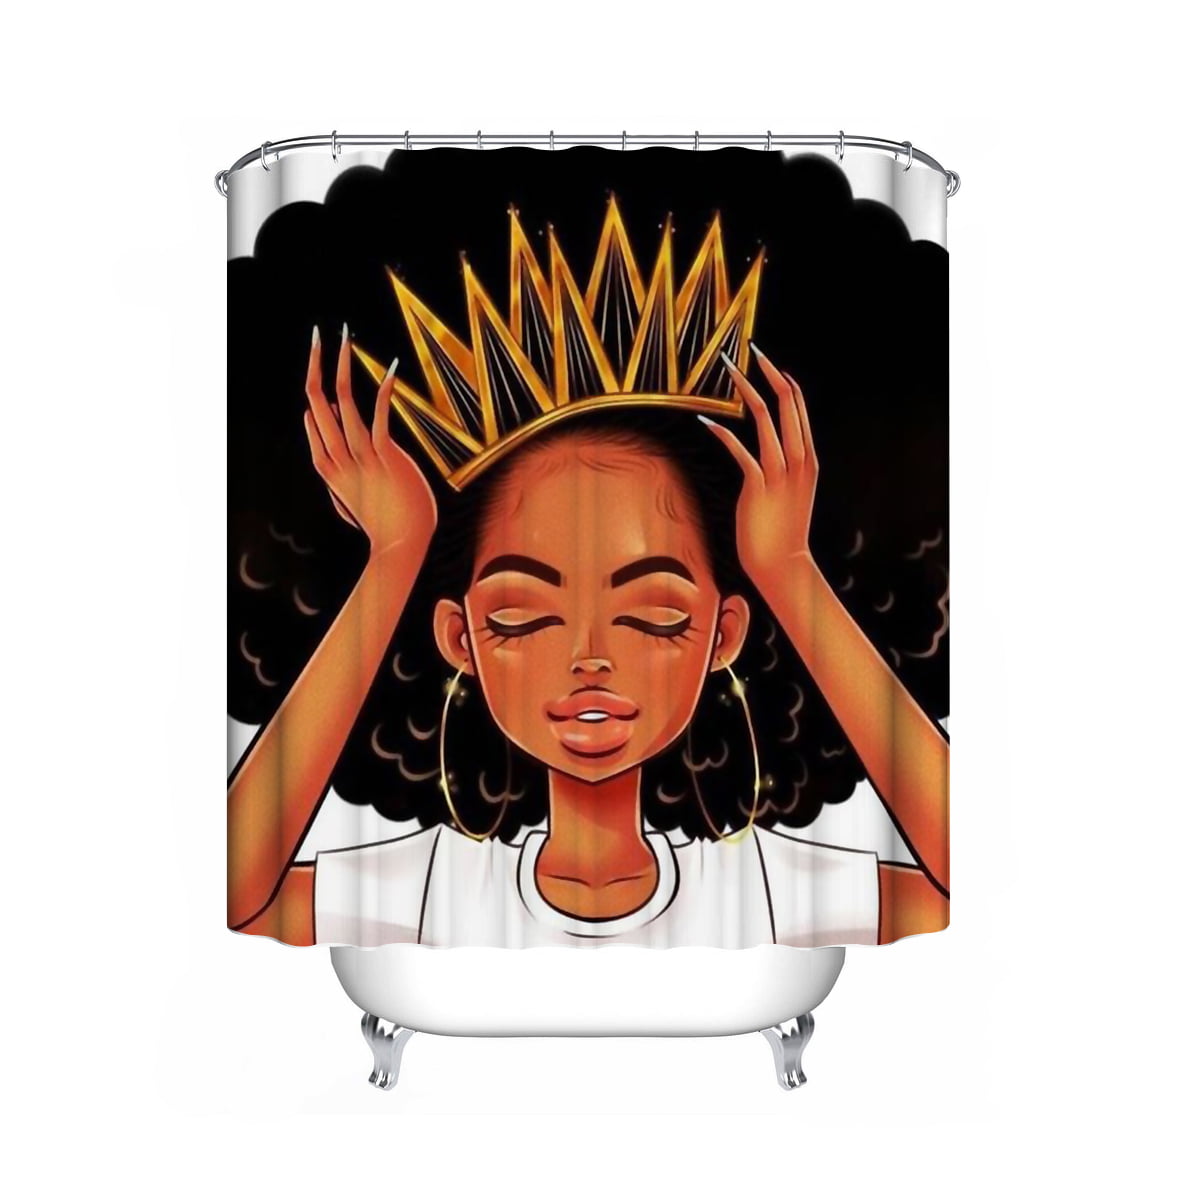 African Black Woman Girl Bathroom Shower Curtain Toilet Cover Pedestal Decor Set